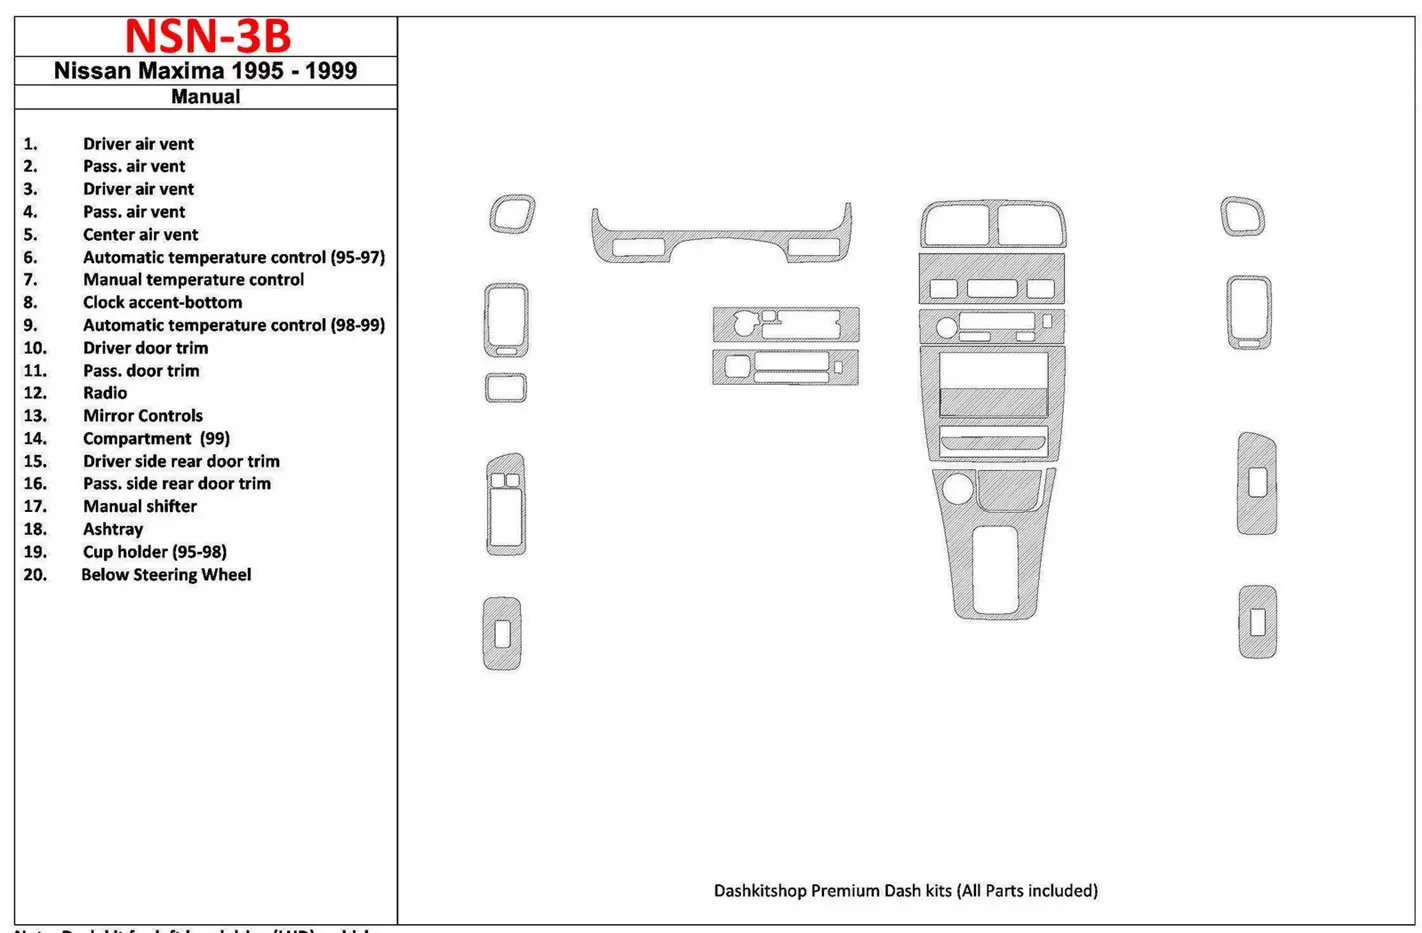 Nissan Maxima 1995-1999 Manual Gearbox, 21 Parts set Interior BD Dash Trim Kit